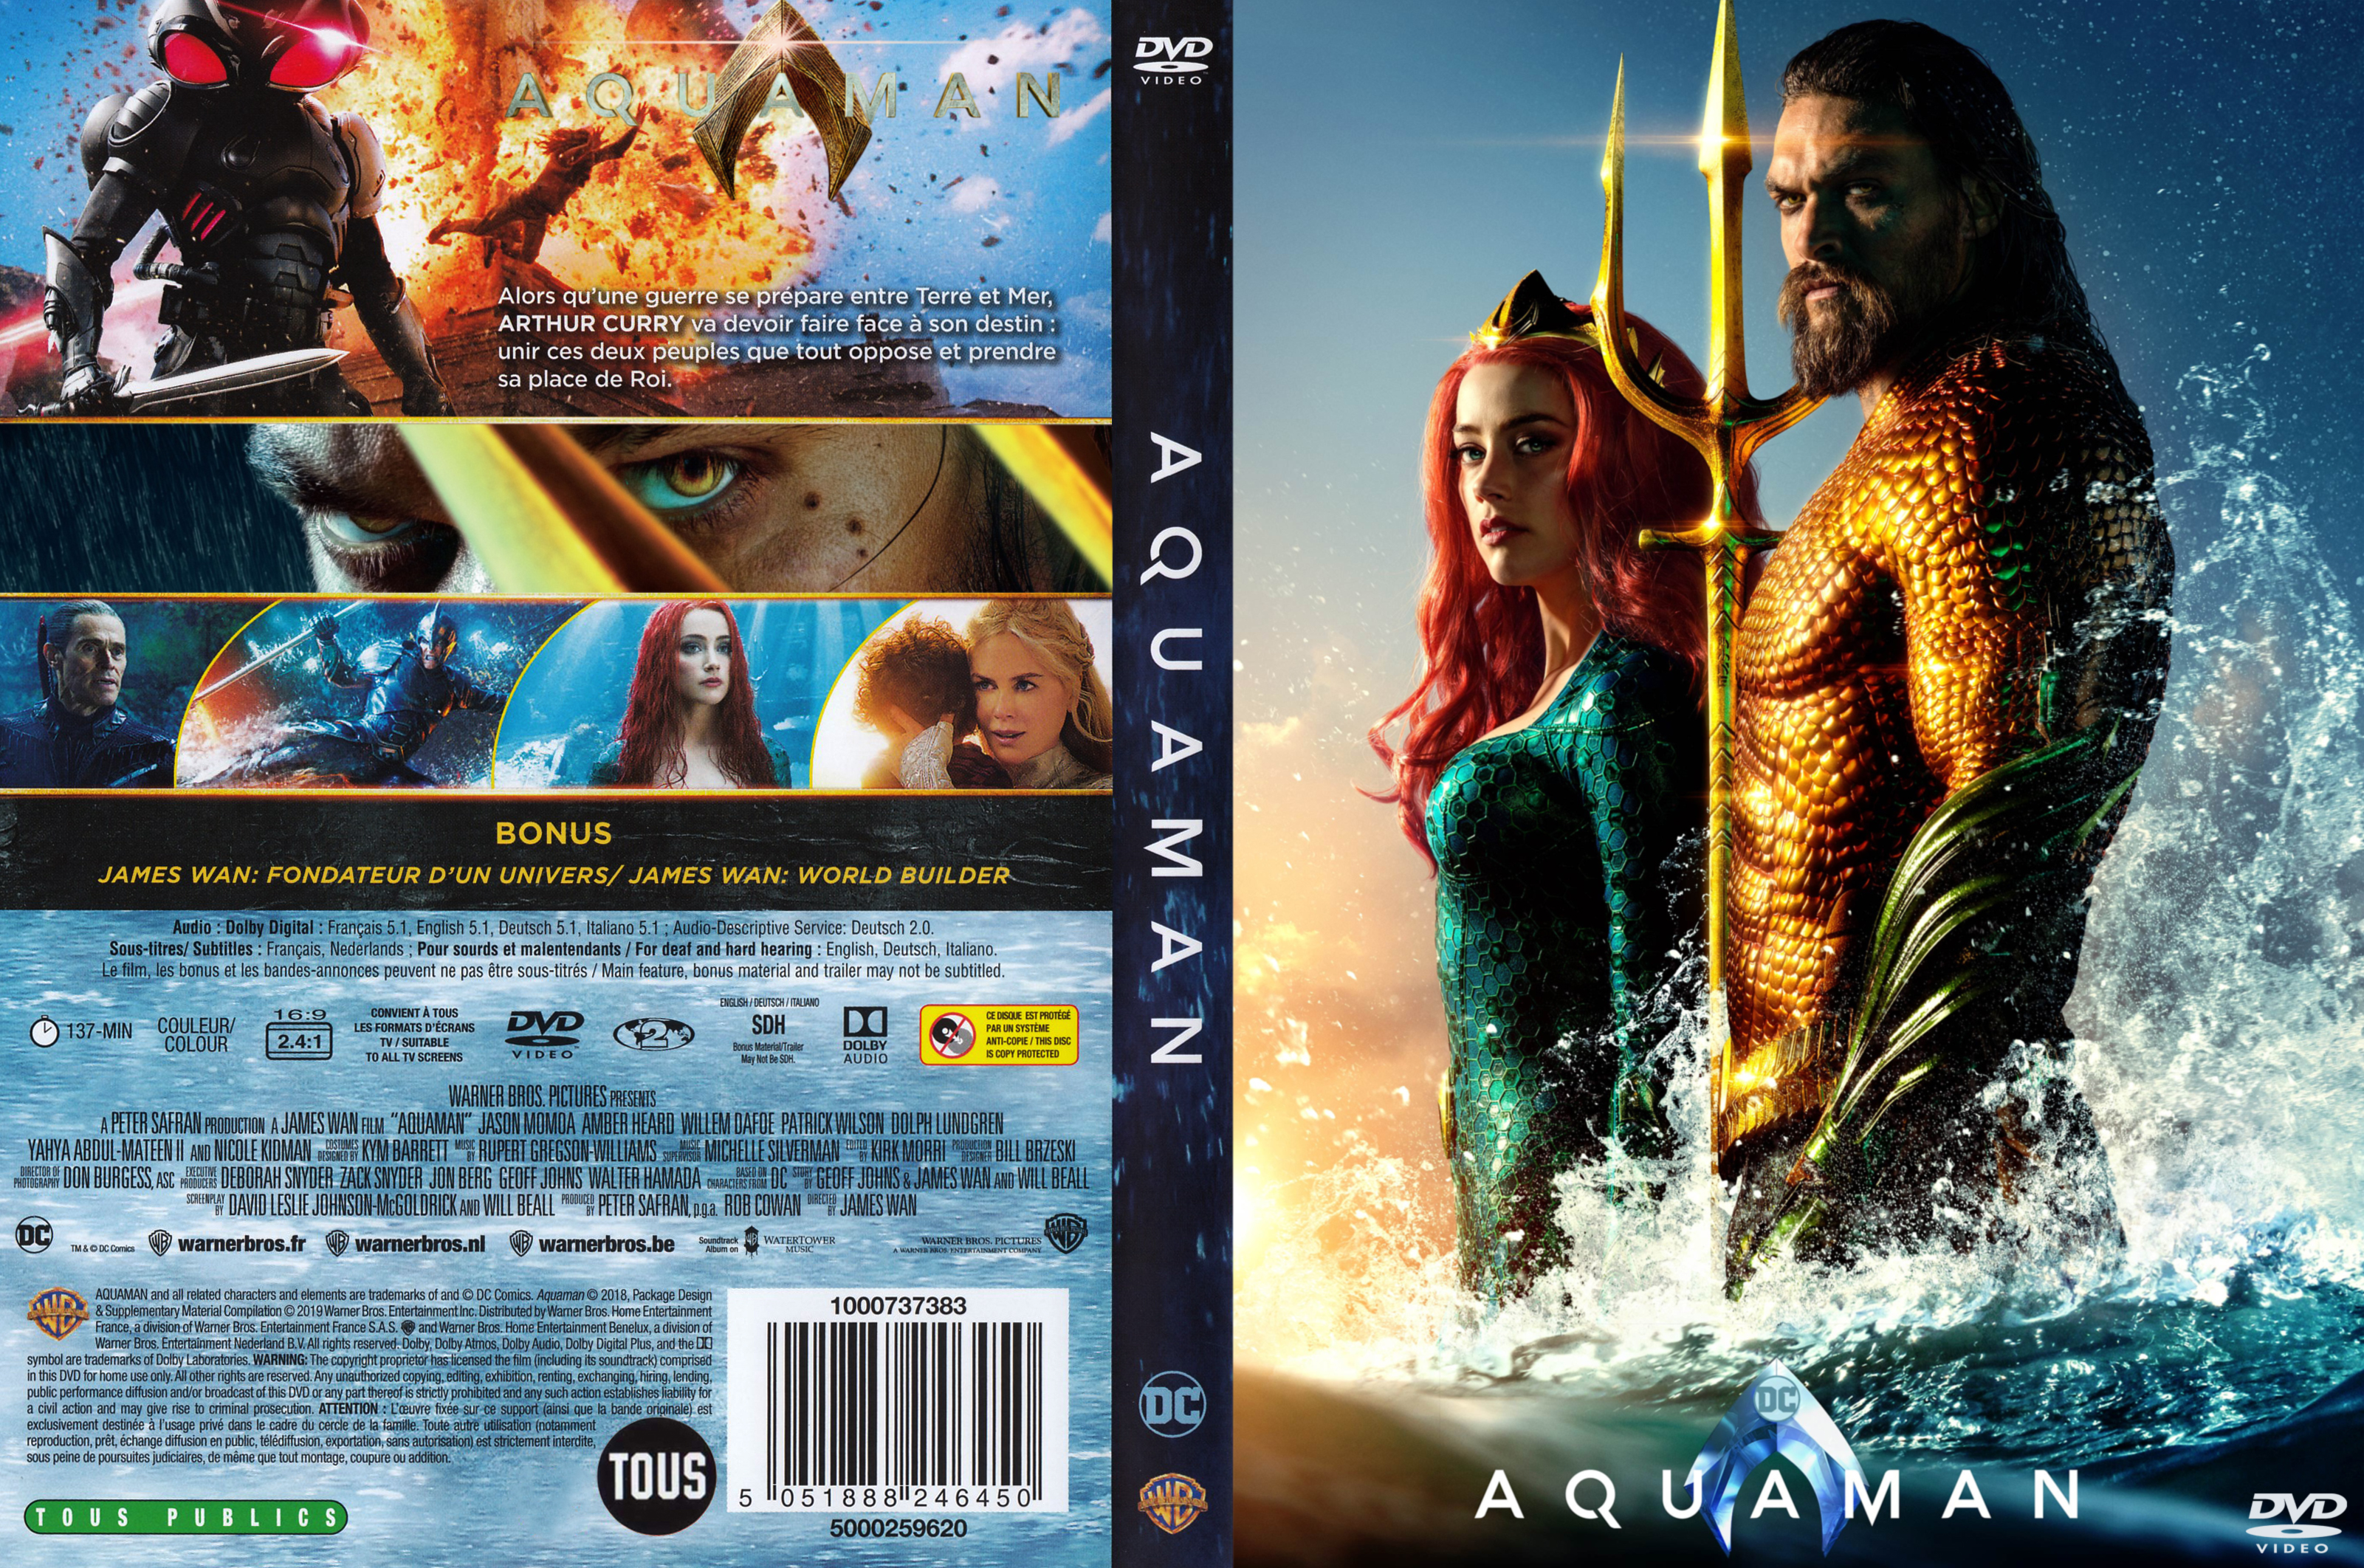 Jaquette DVD Aquaman custom